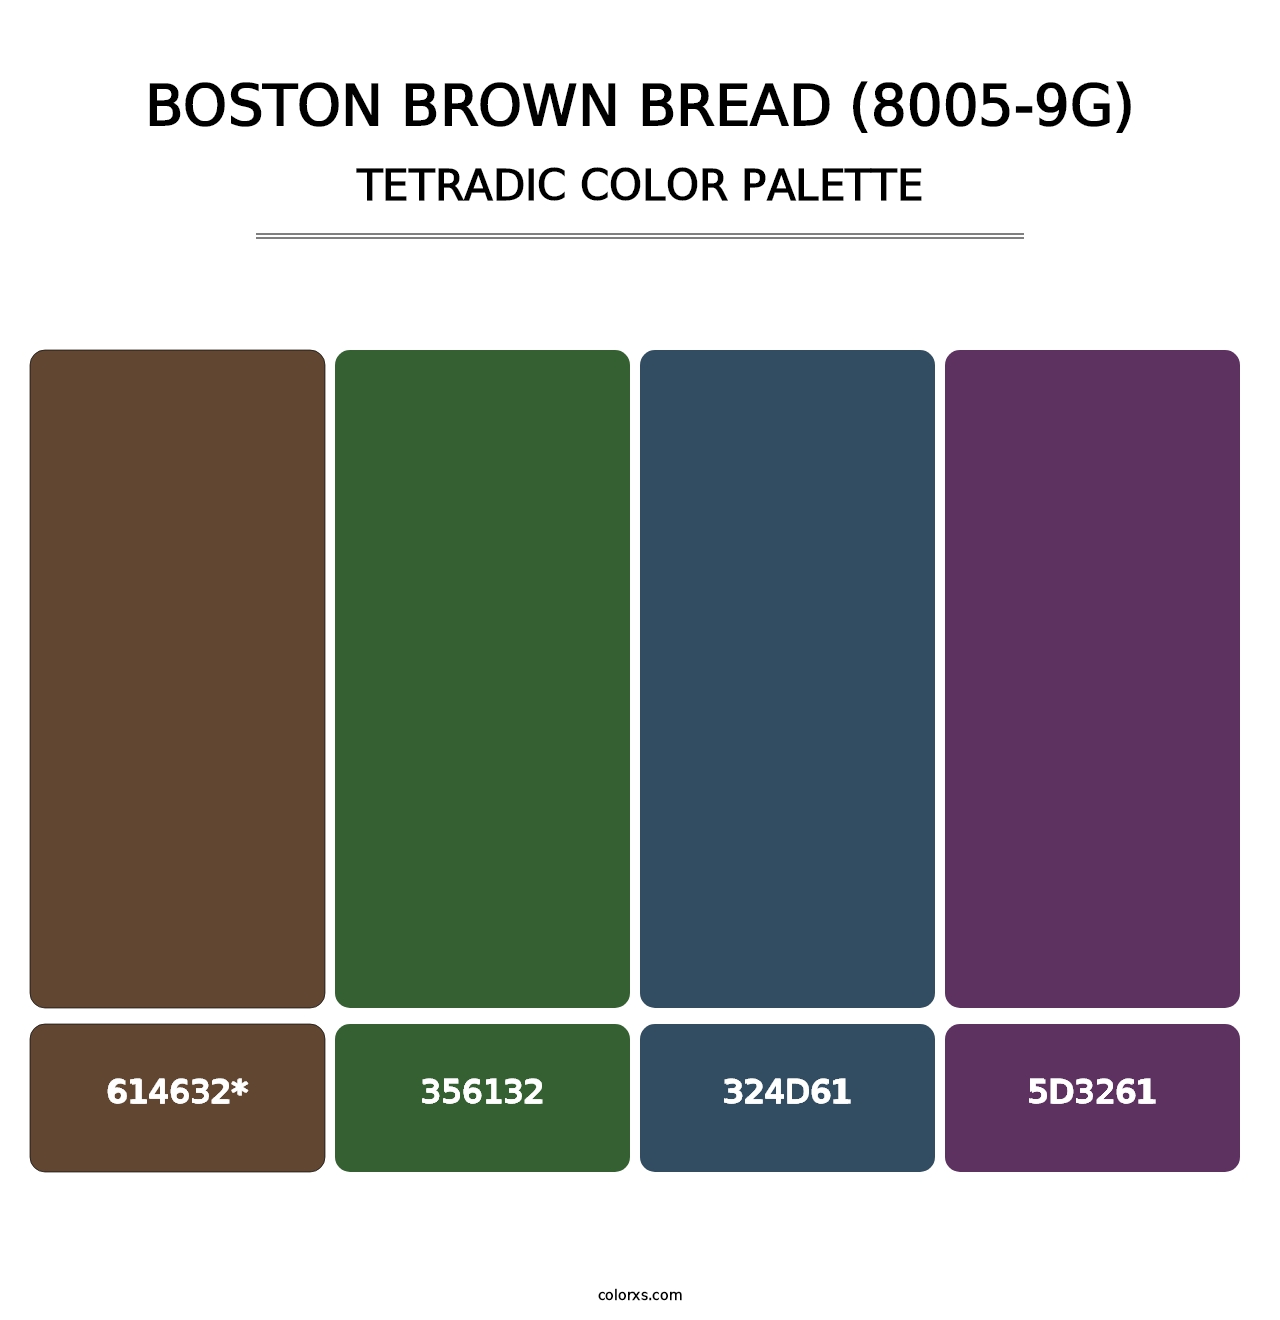 Boston Brown Bread (8005-9G) - Tetradic Color Palette